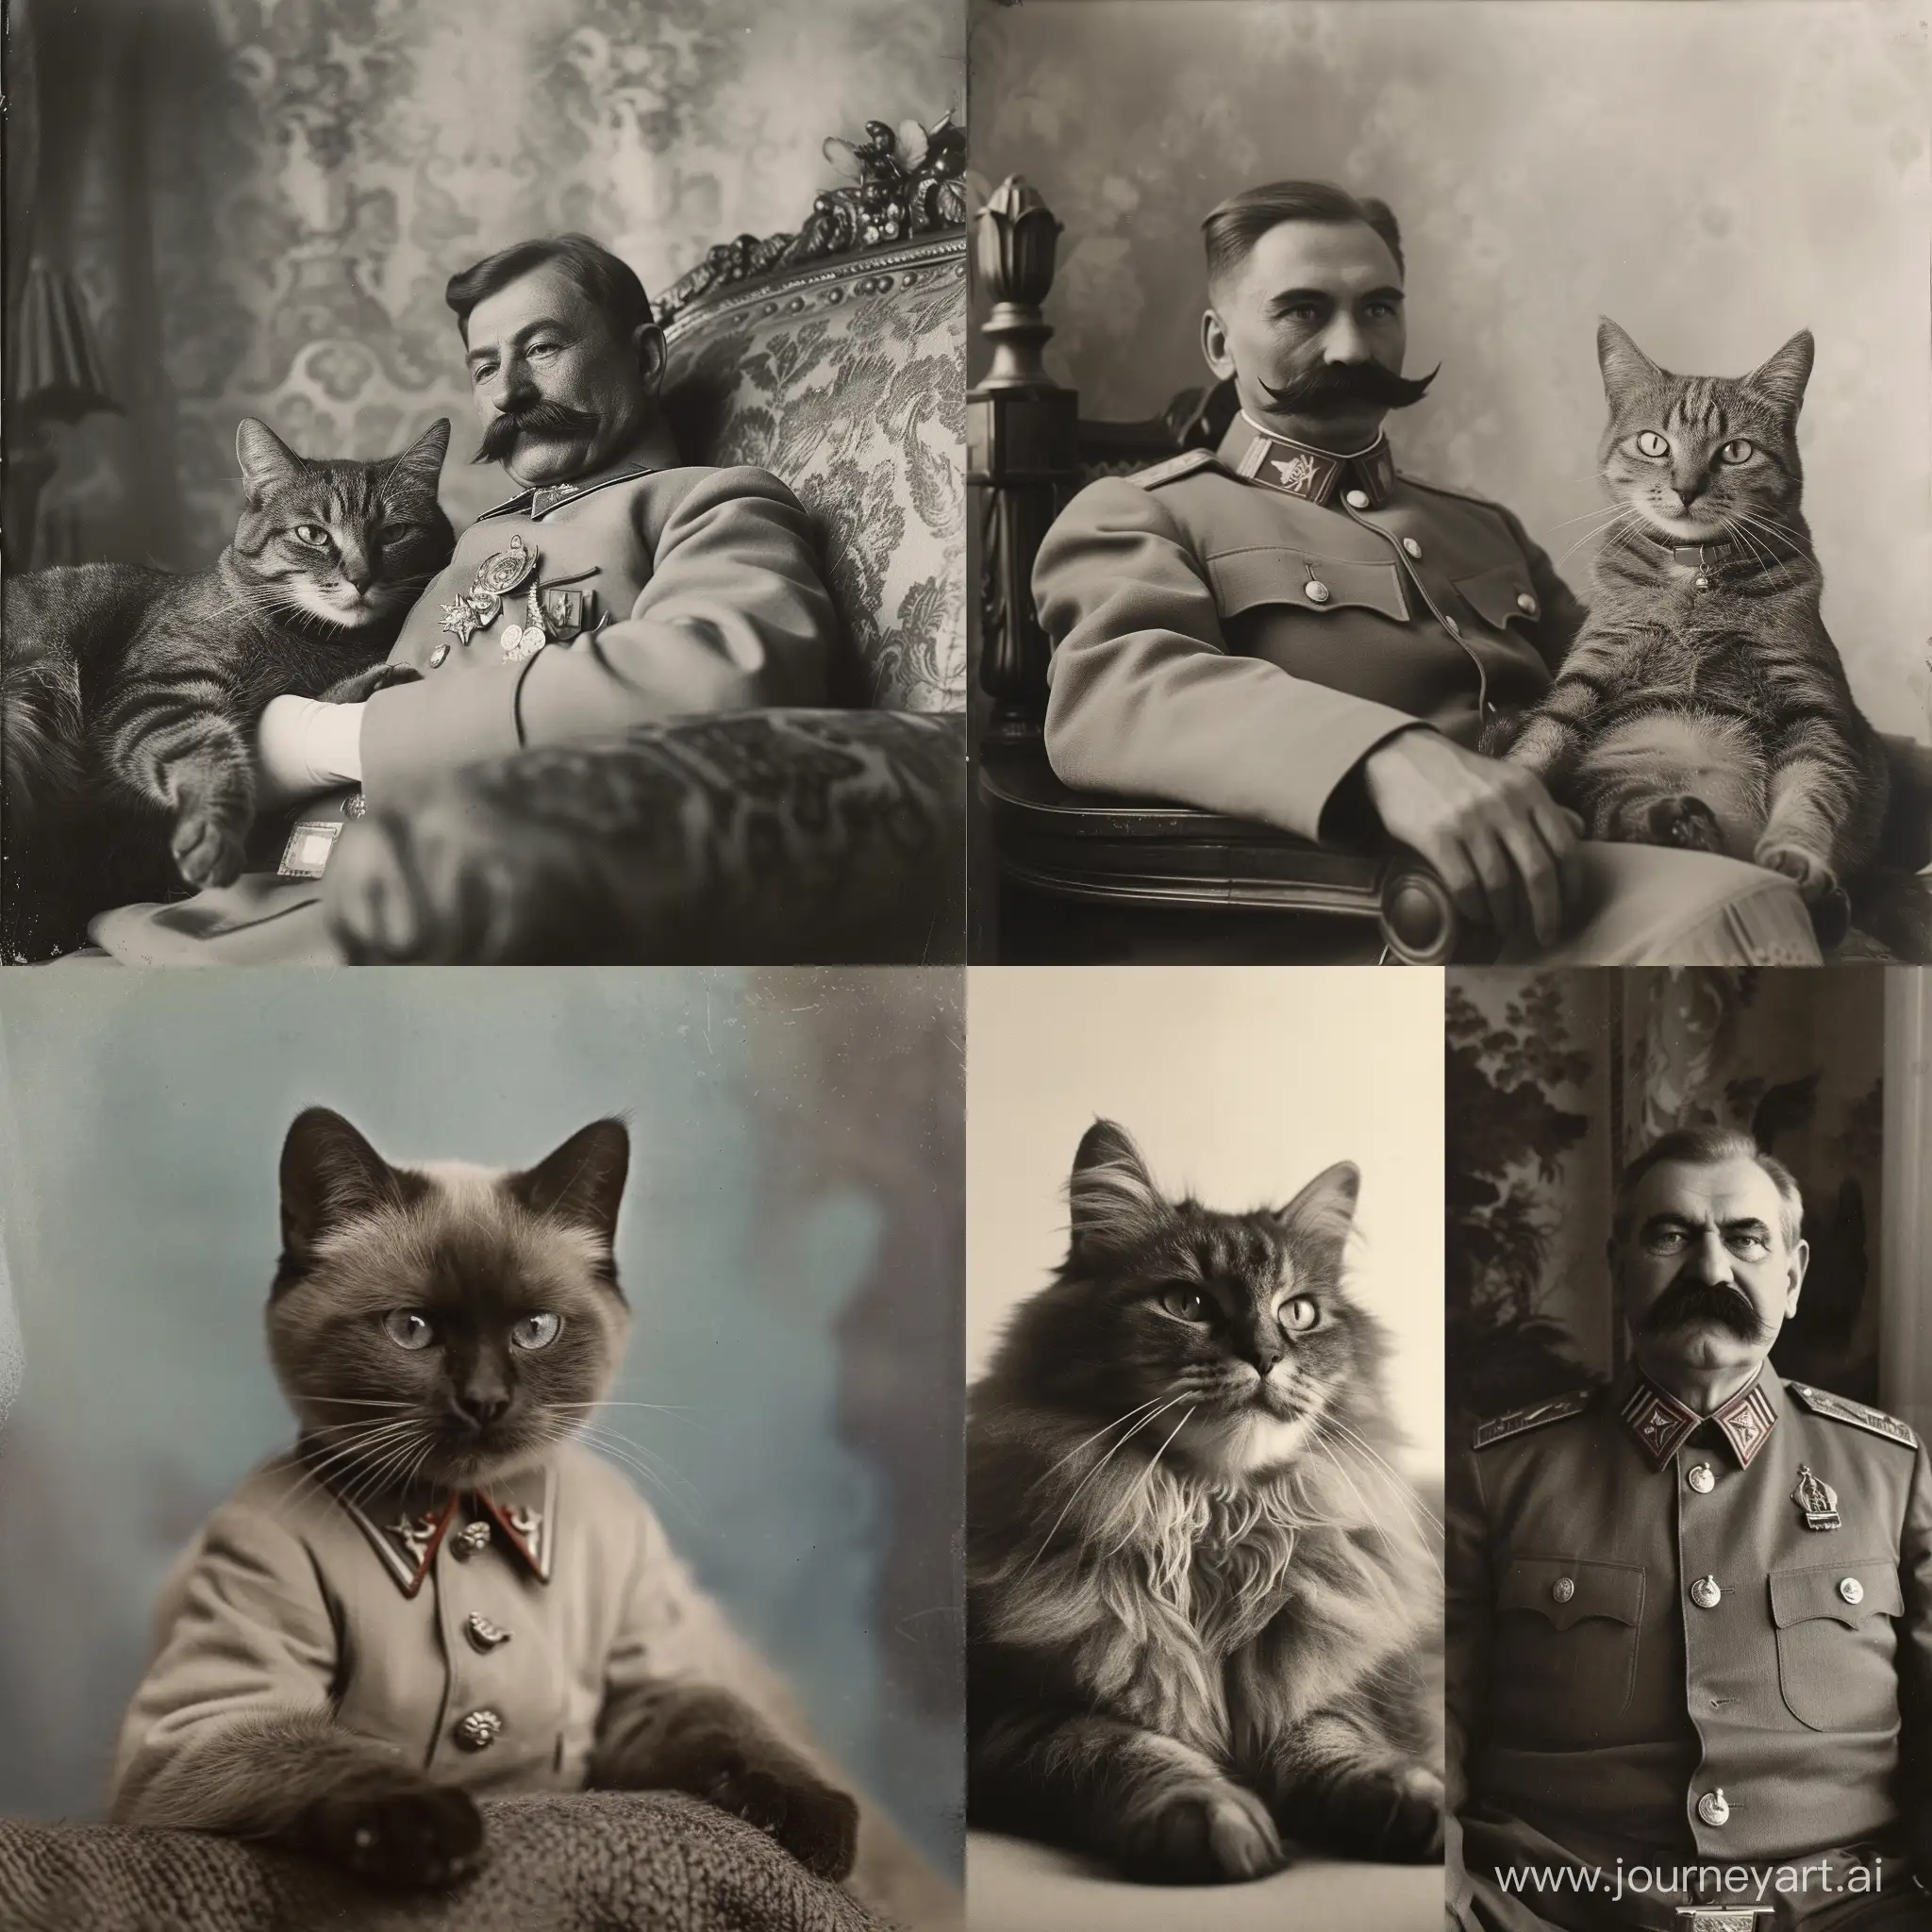 Kitty similar to Joseph Stalin 